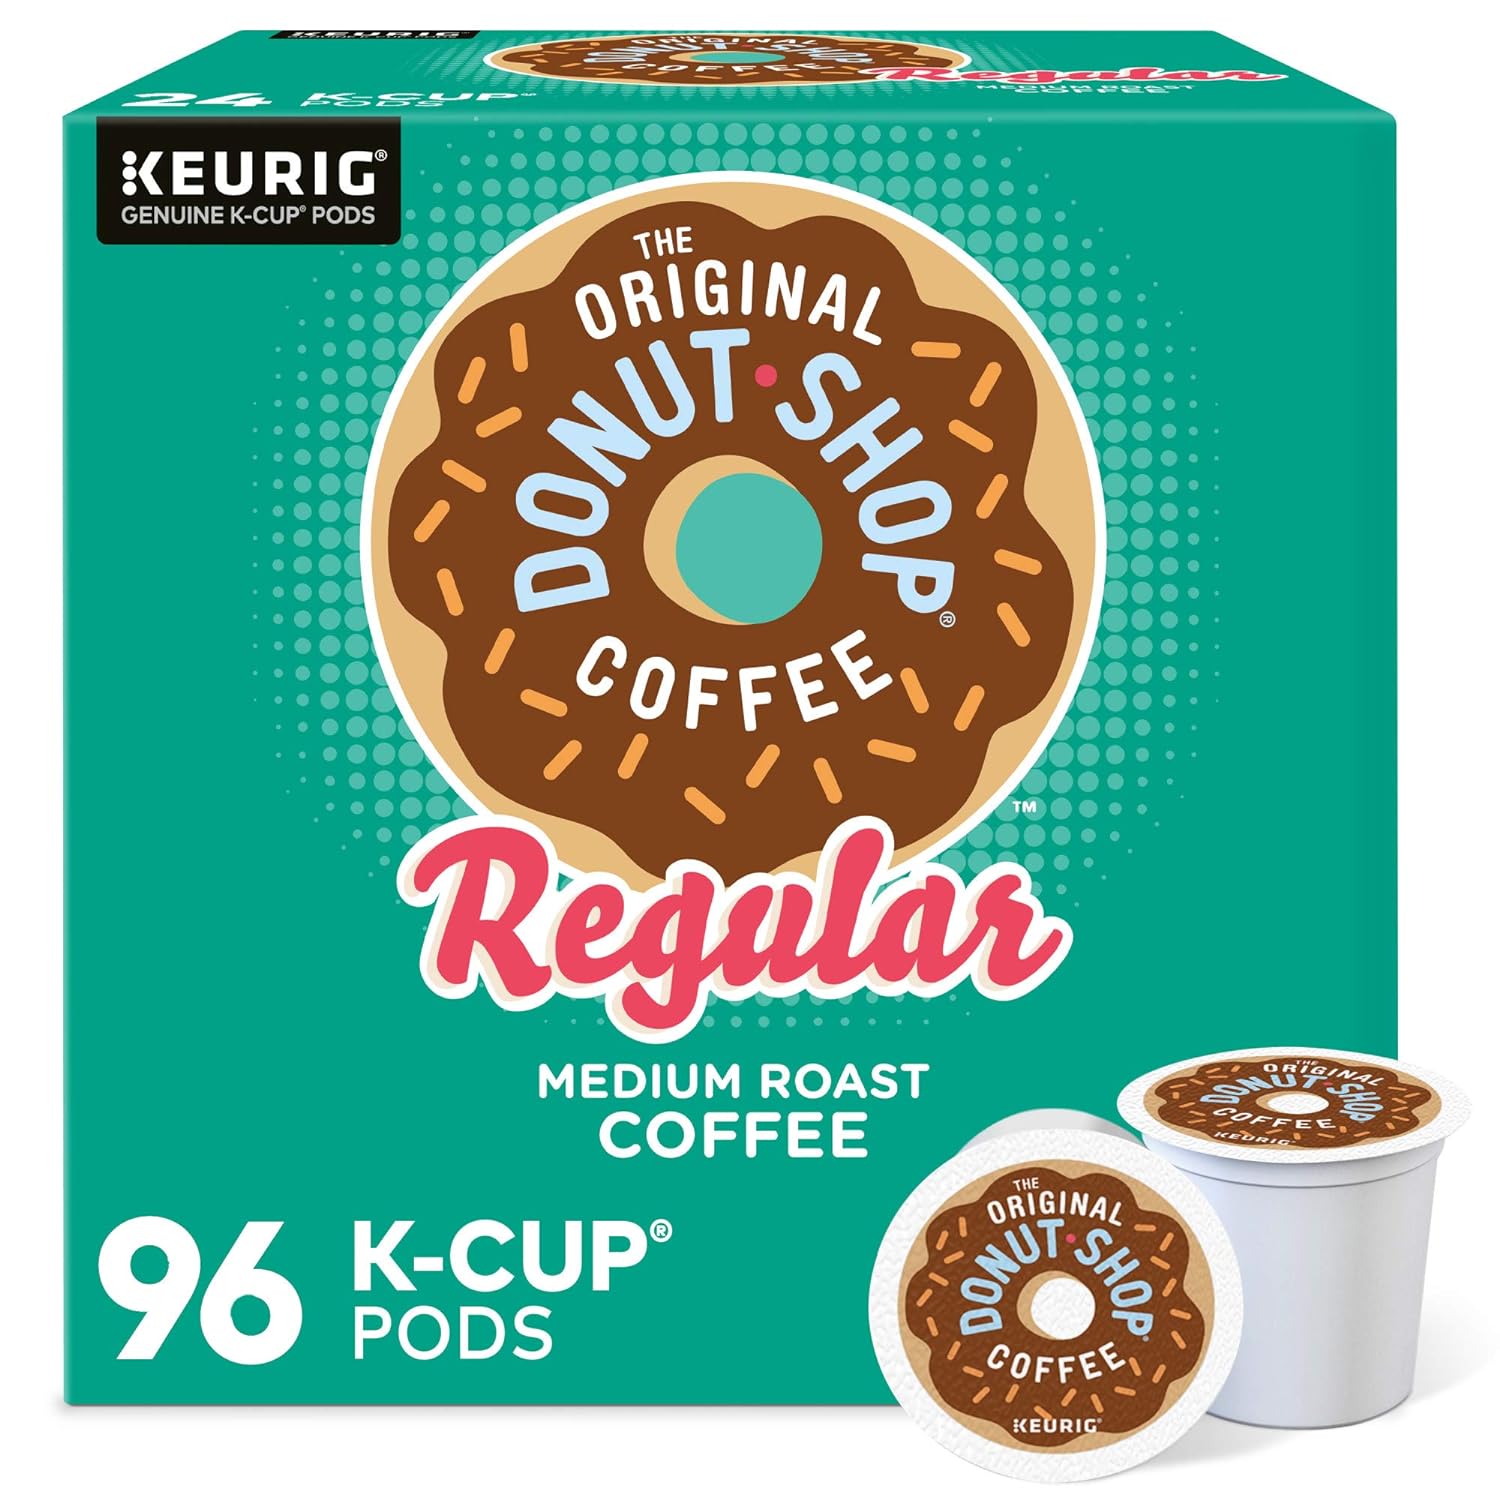 96-Count The Original Donut Shop Coffee Regular K-cup Coffee Pods (Medium Roast) $35.20 w/ S&S + Free Shipping